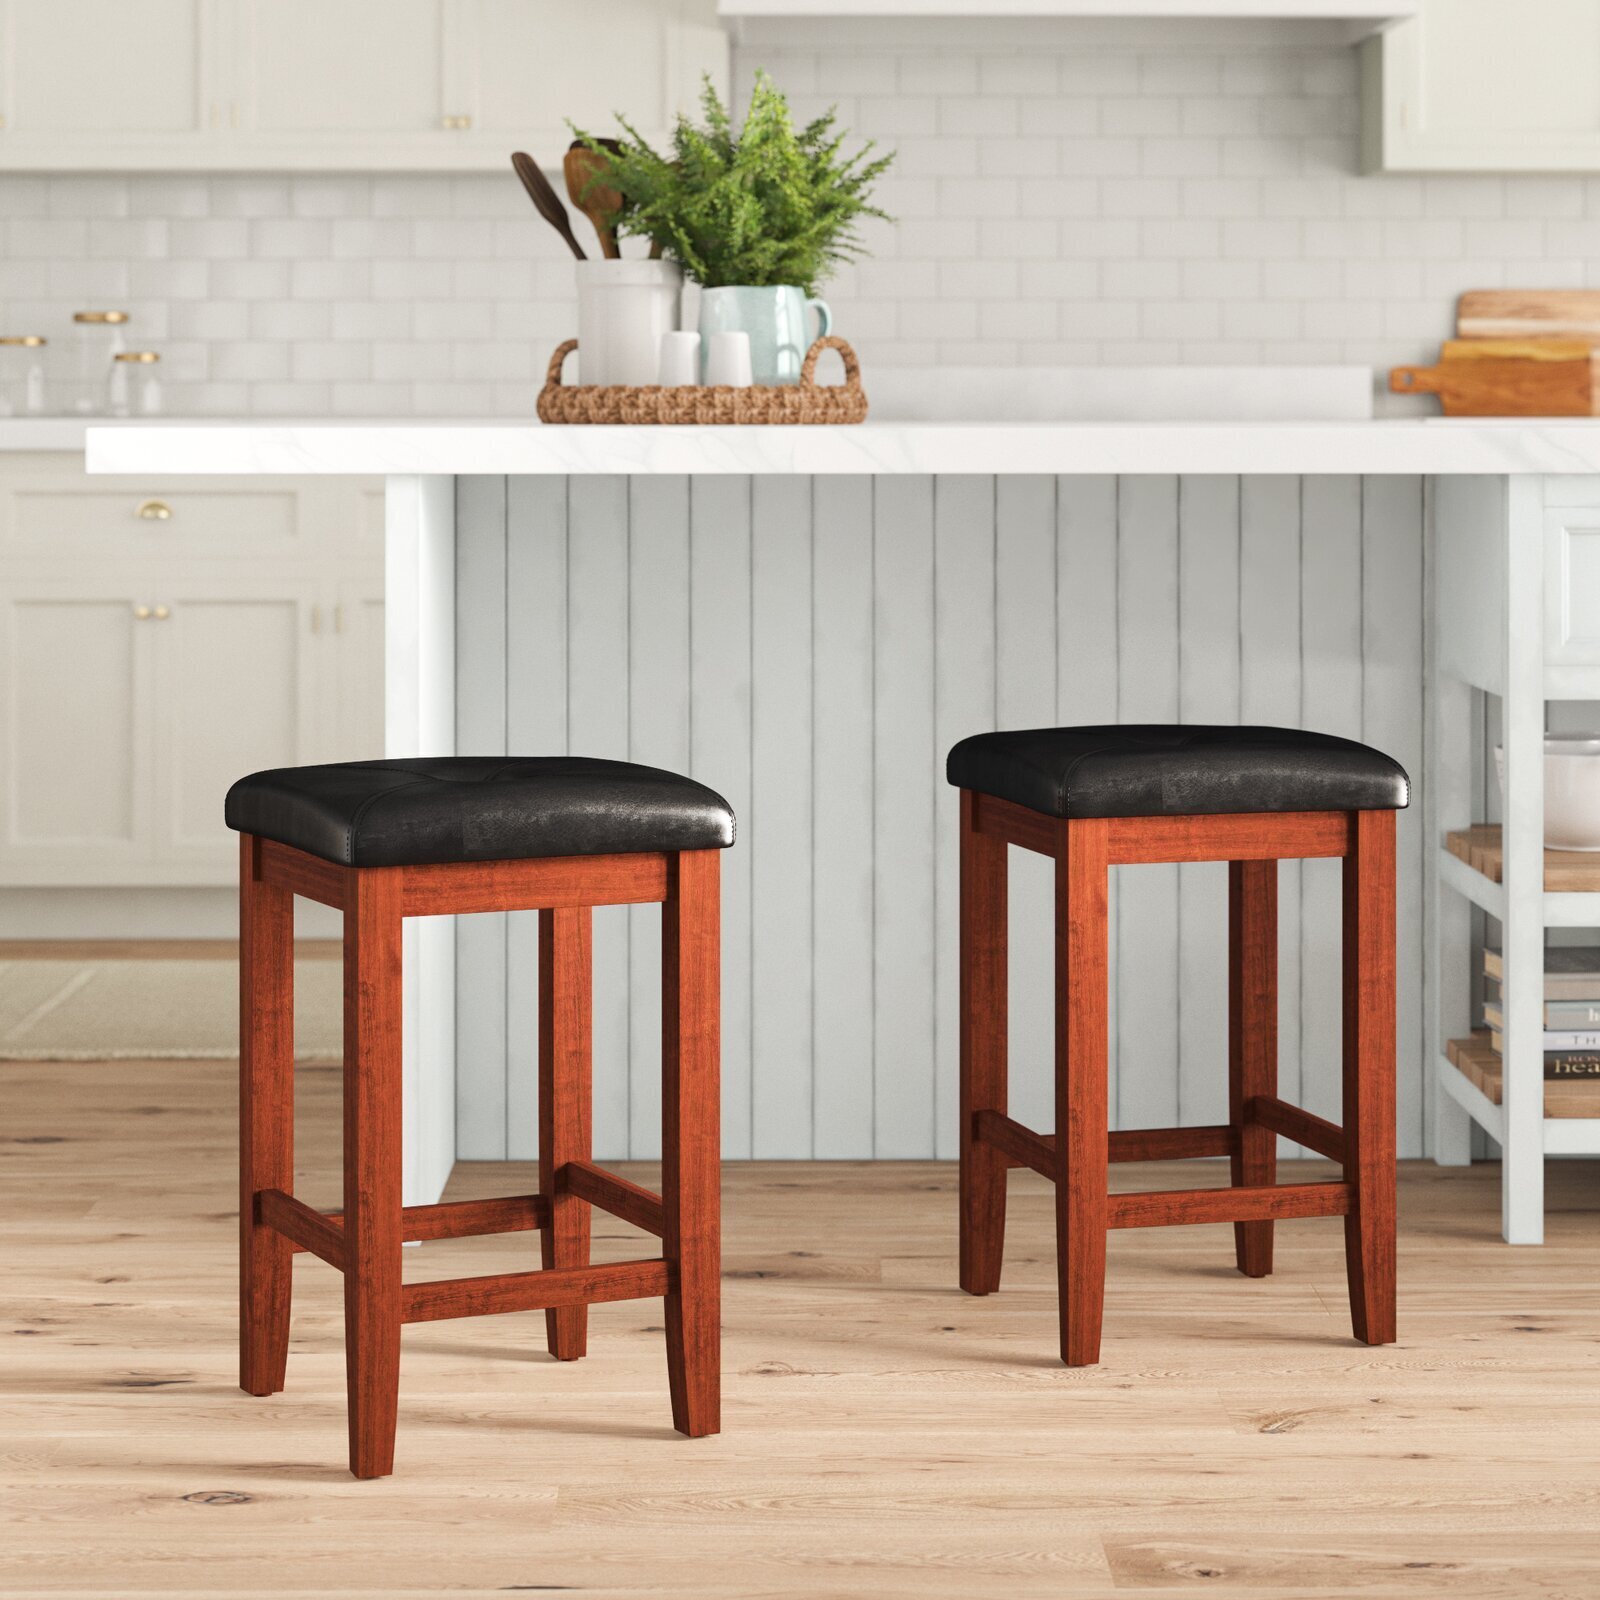 Upholstered shaker style bar stools